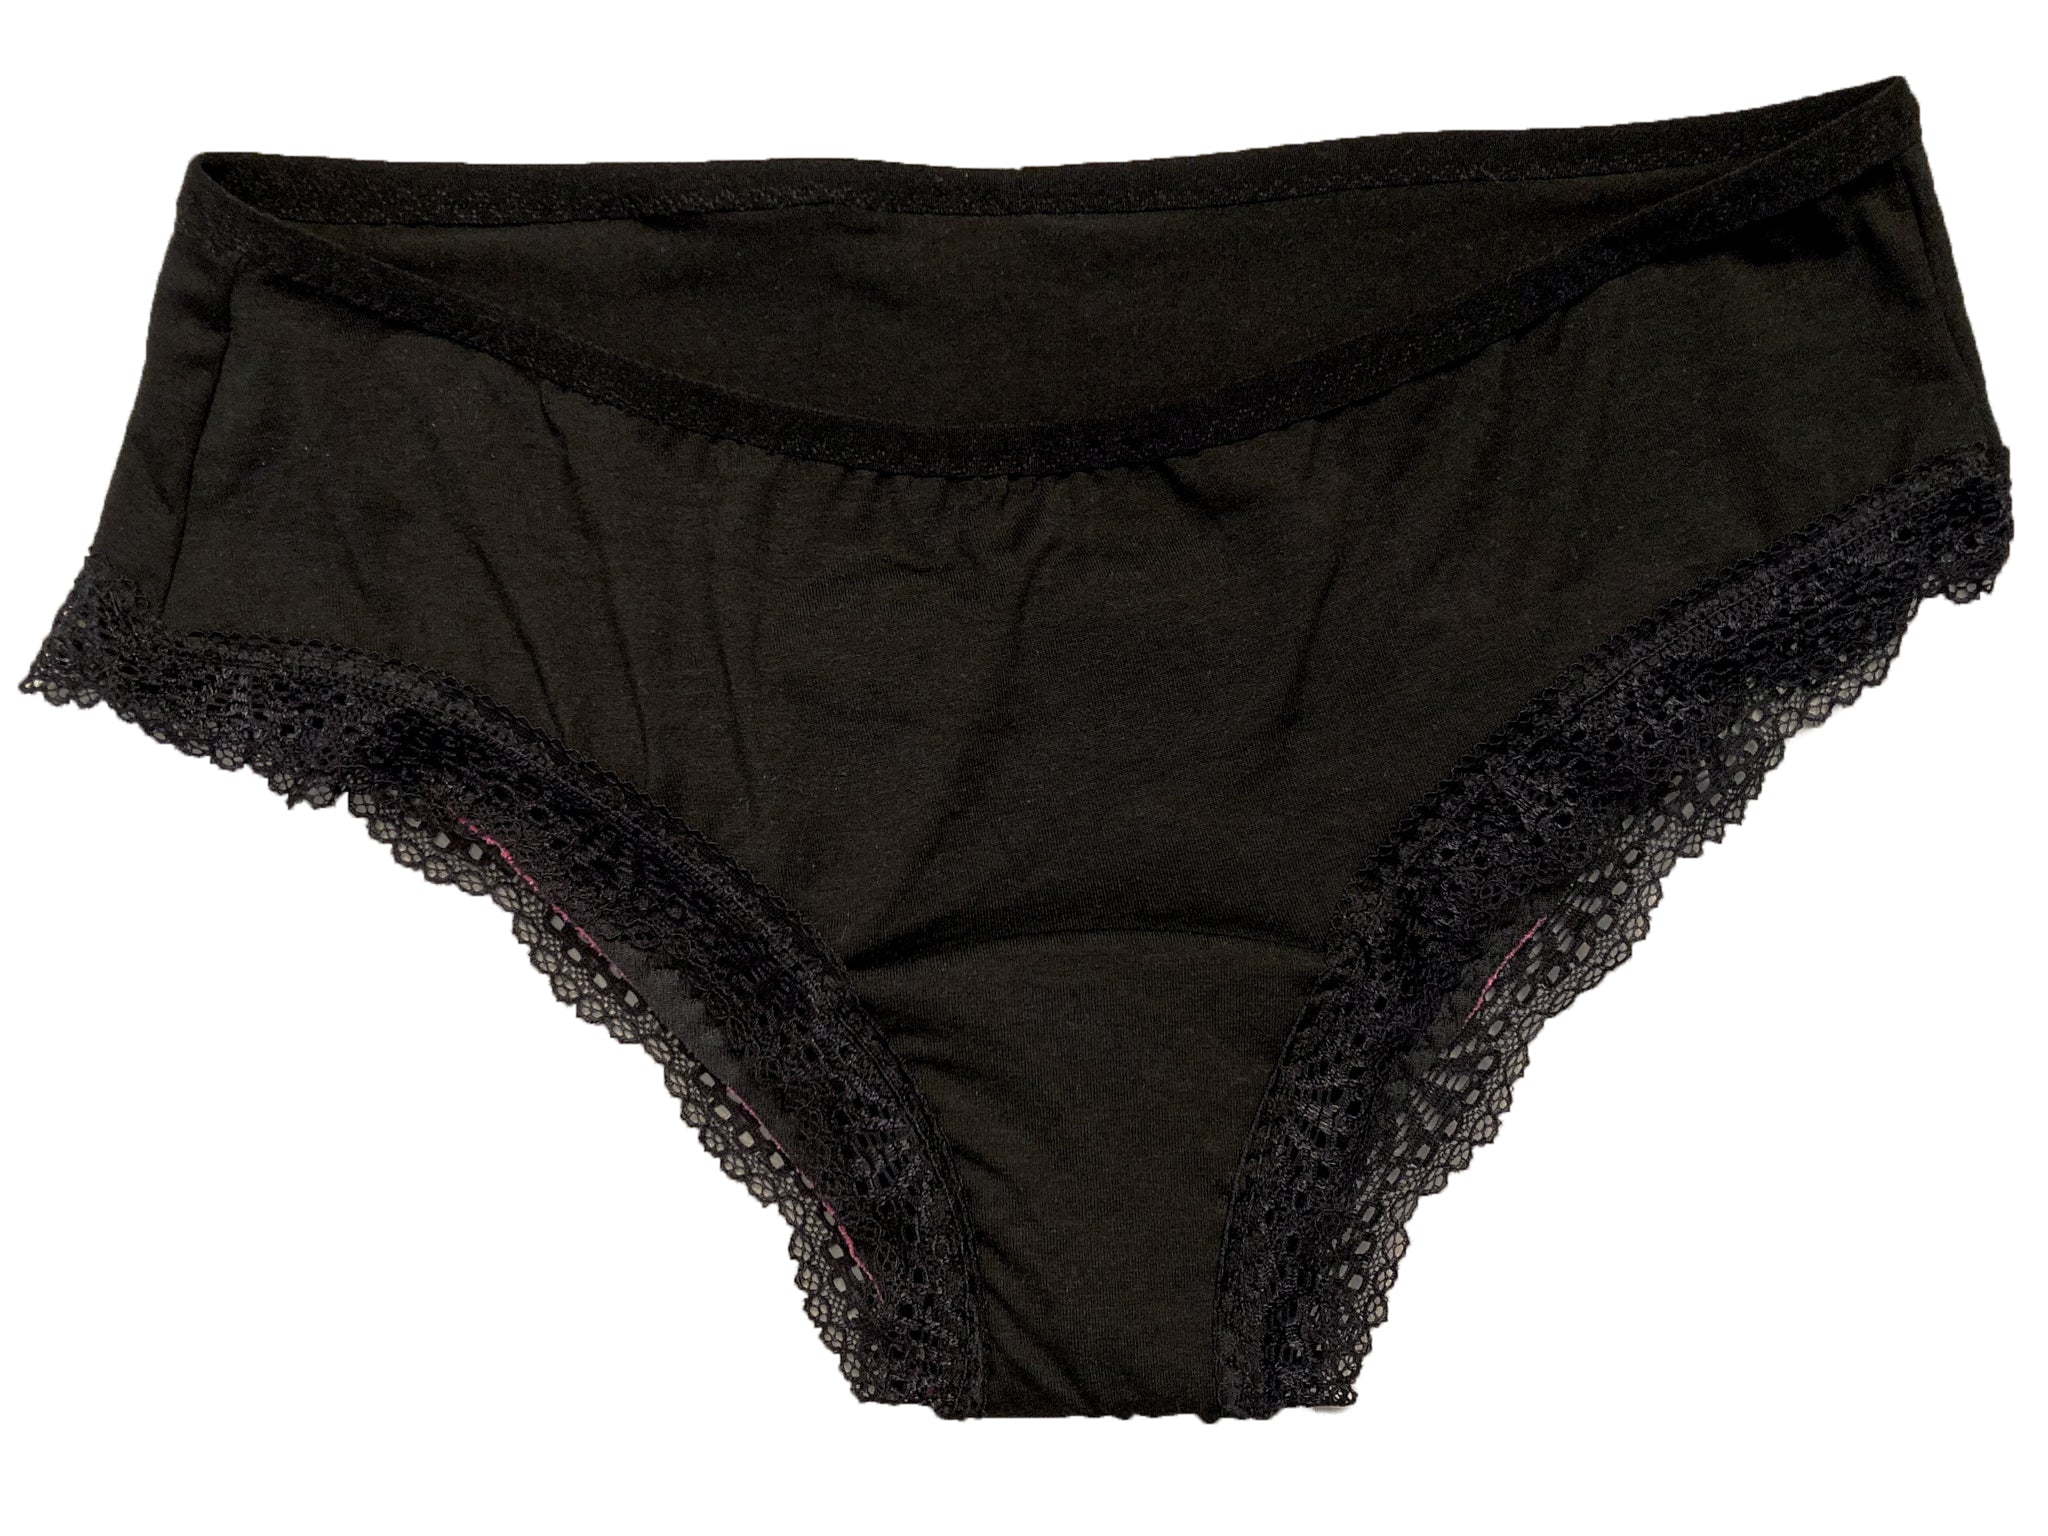 VeNove period panties PDF sewing pattern –